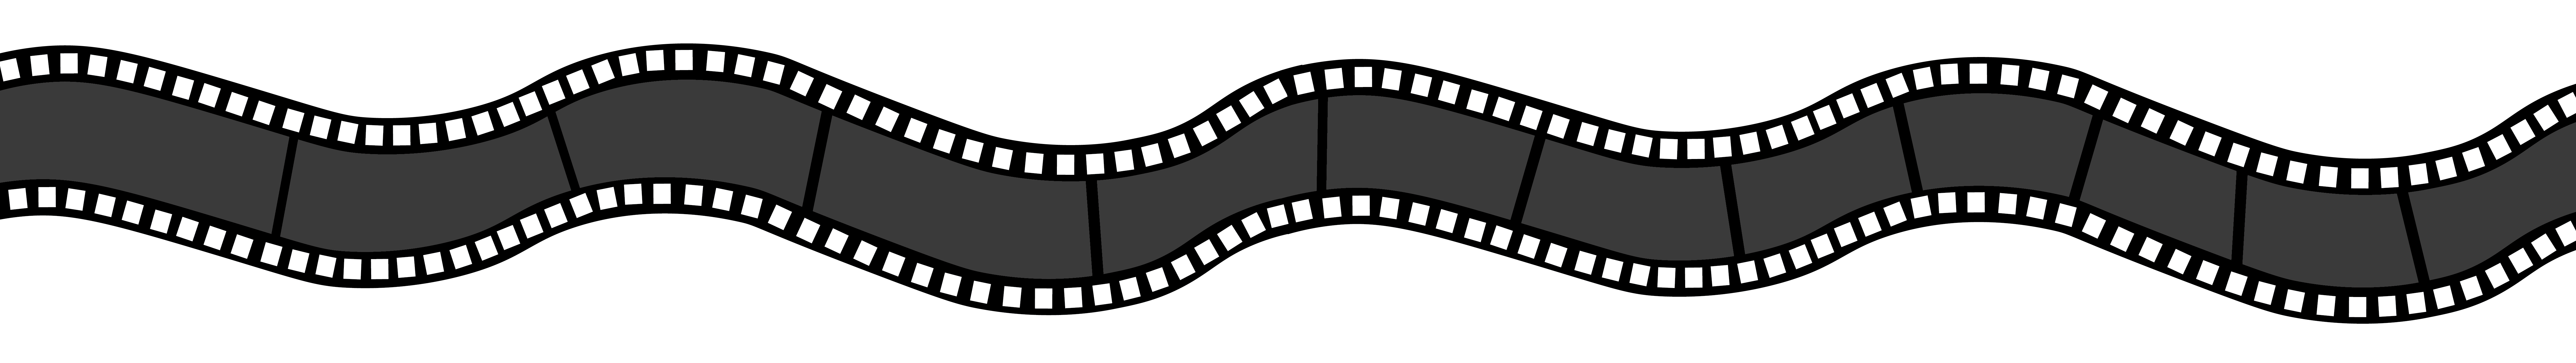 film illustration